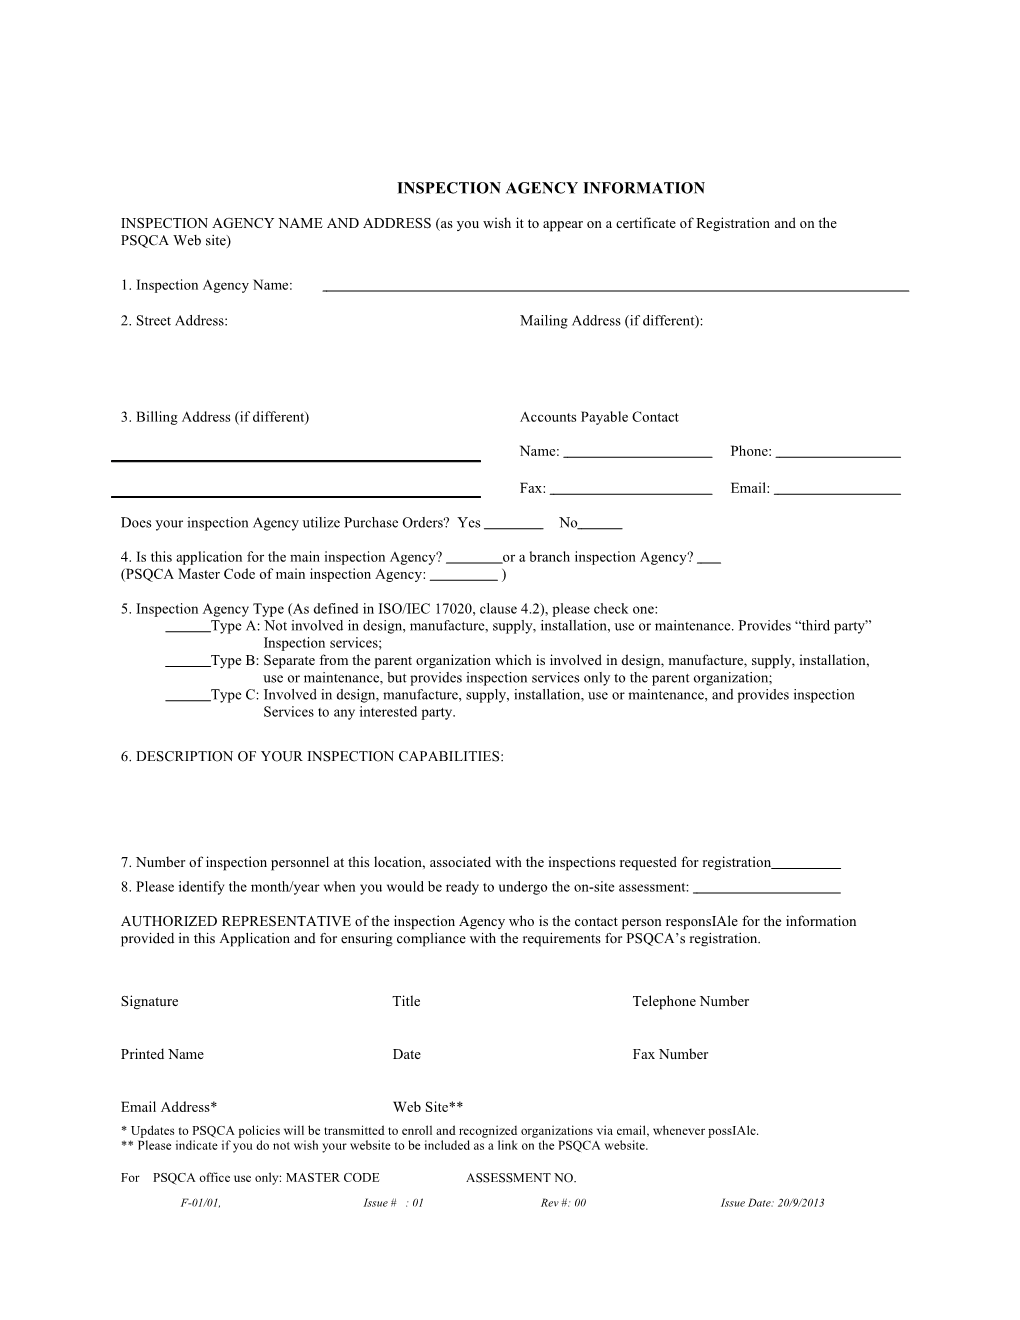 Application Form for Peer Evaluation Registration of Inspection Bodies